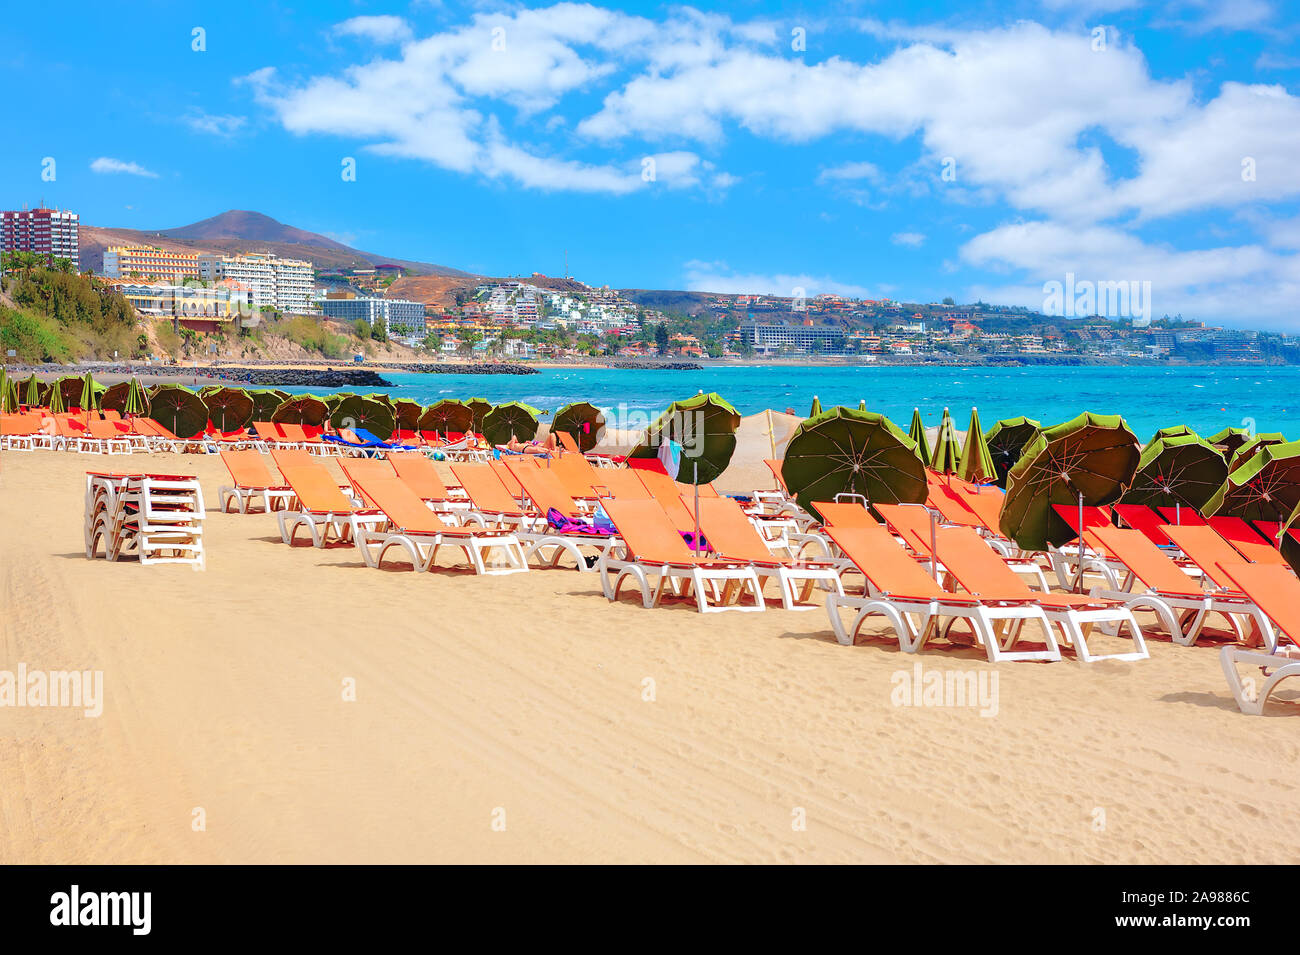 Beach on seaside of Playa del Ingles resort town. Gran Canaria, Canary islands, Spain Stock Photo